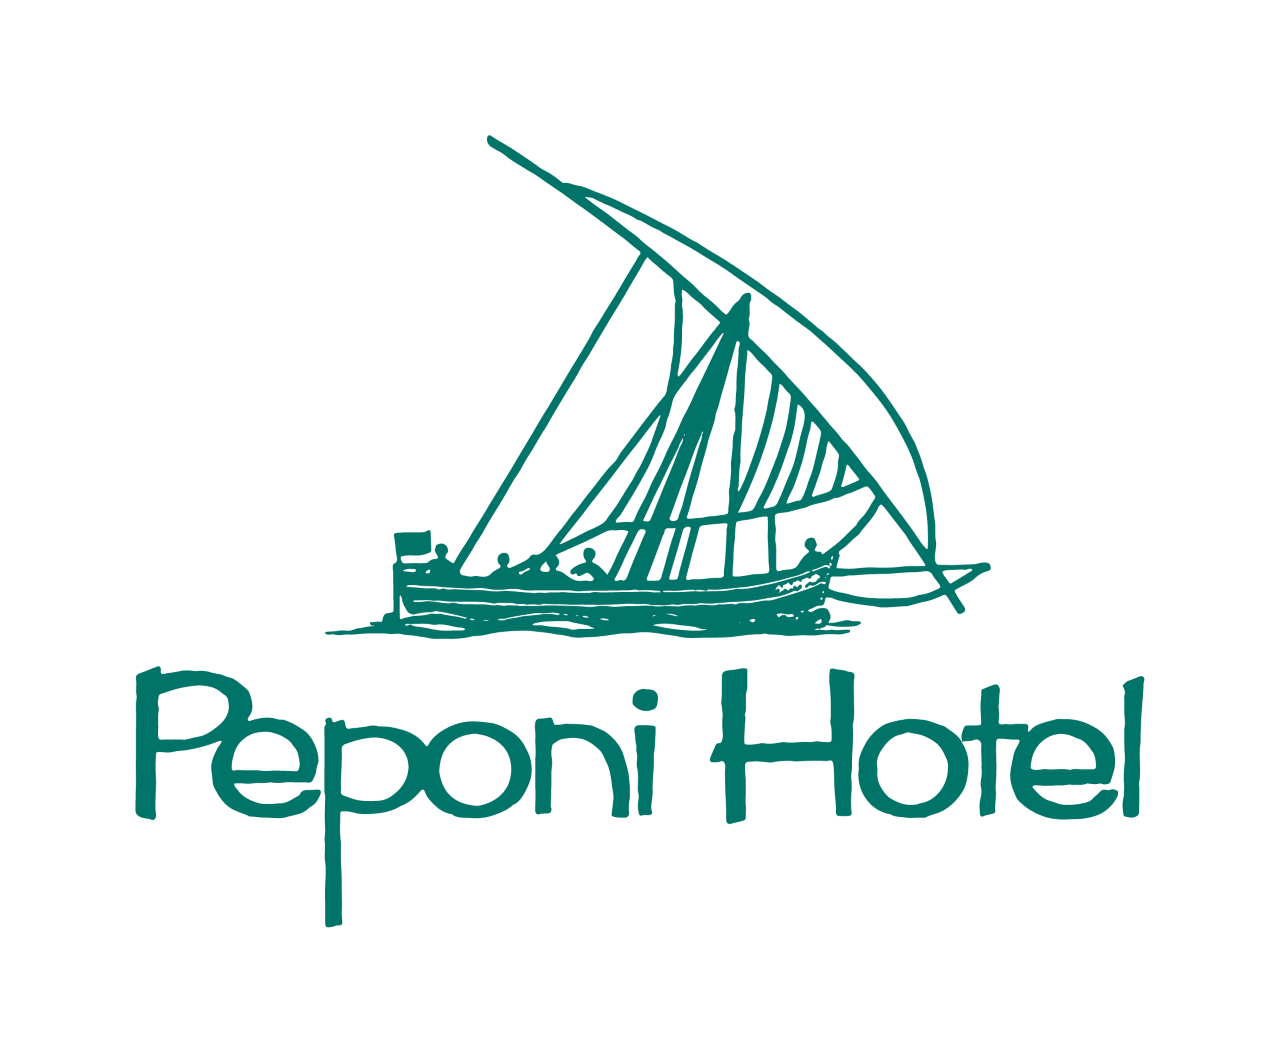 Peponi Hotel